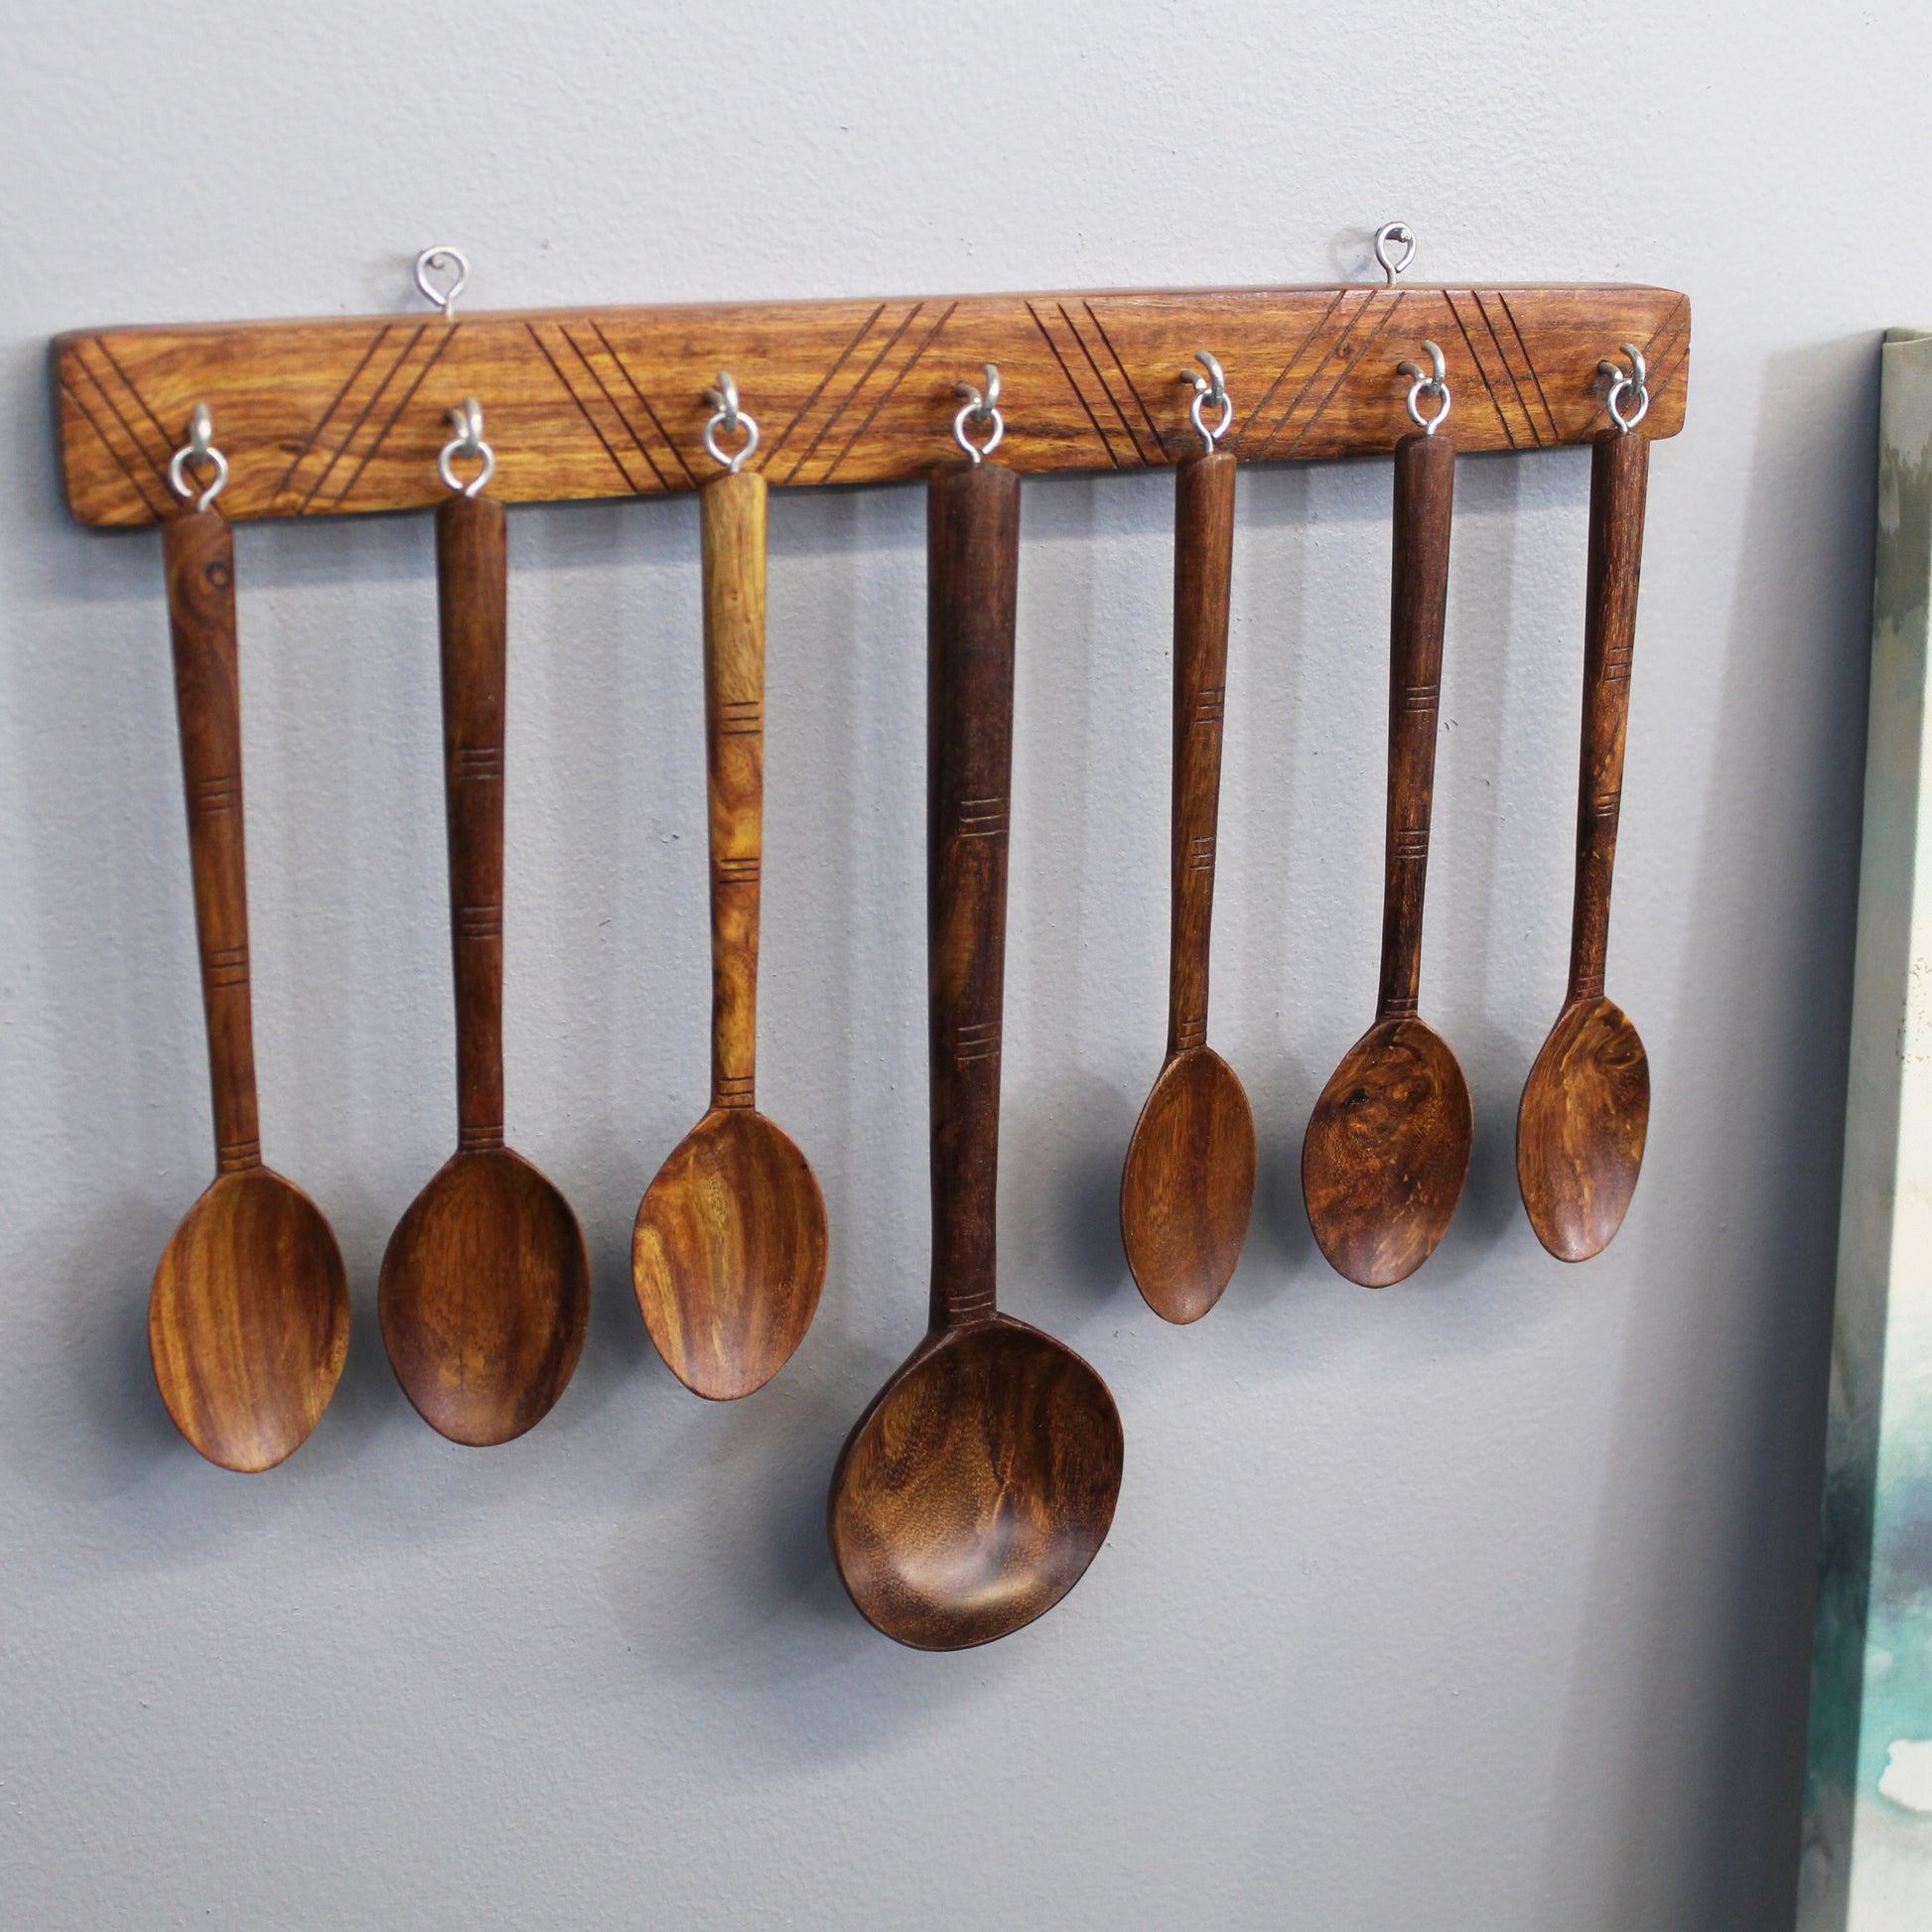 Wooden Spoon Set & Holder